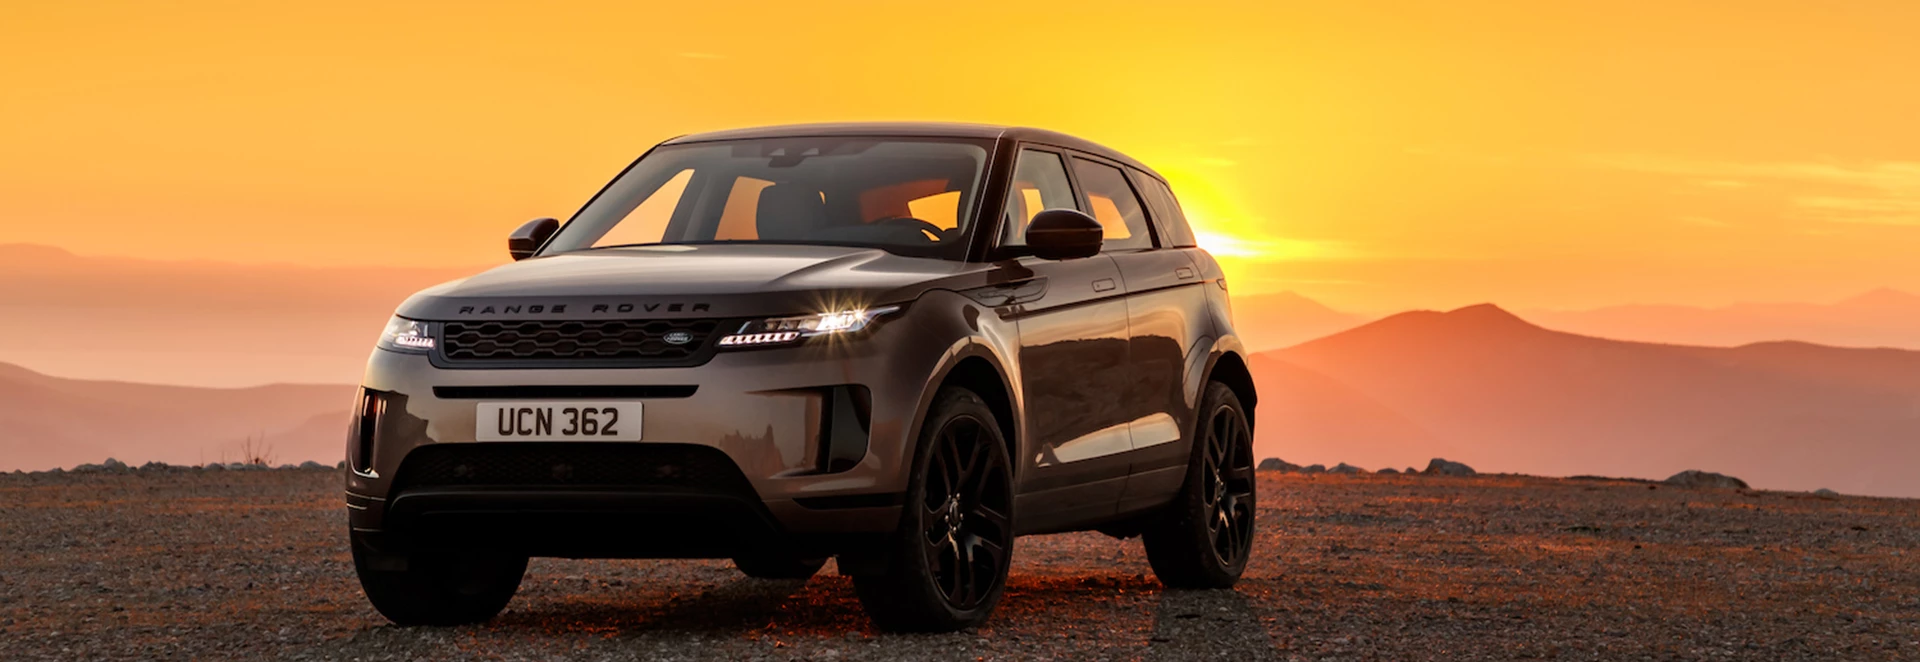 2019 Range Rover Evoque: Safety score explained